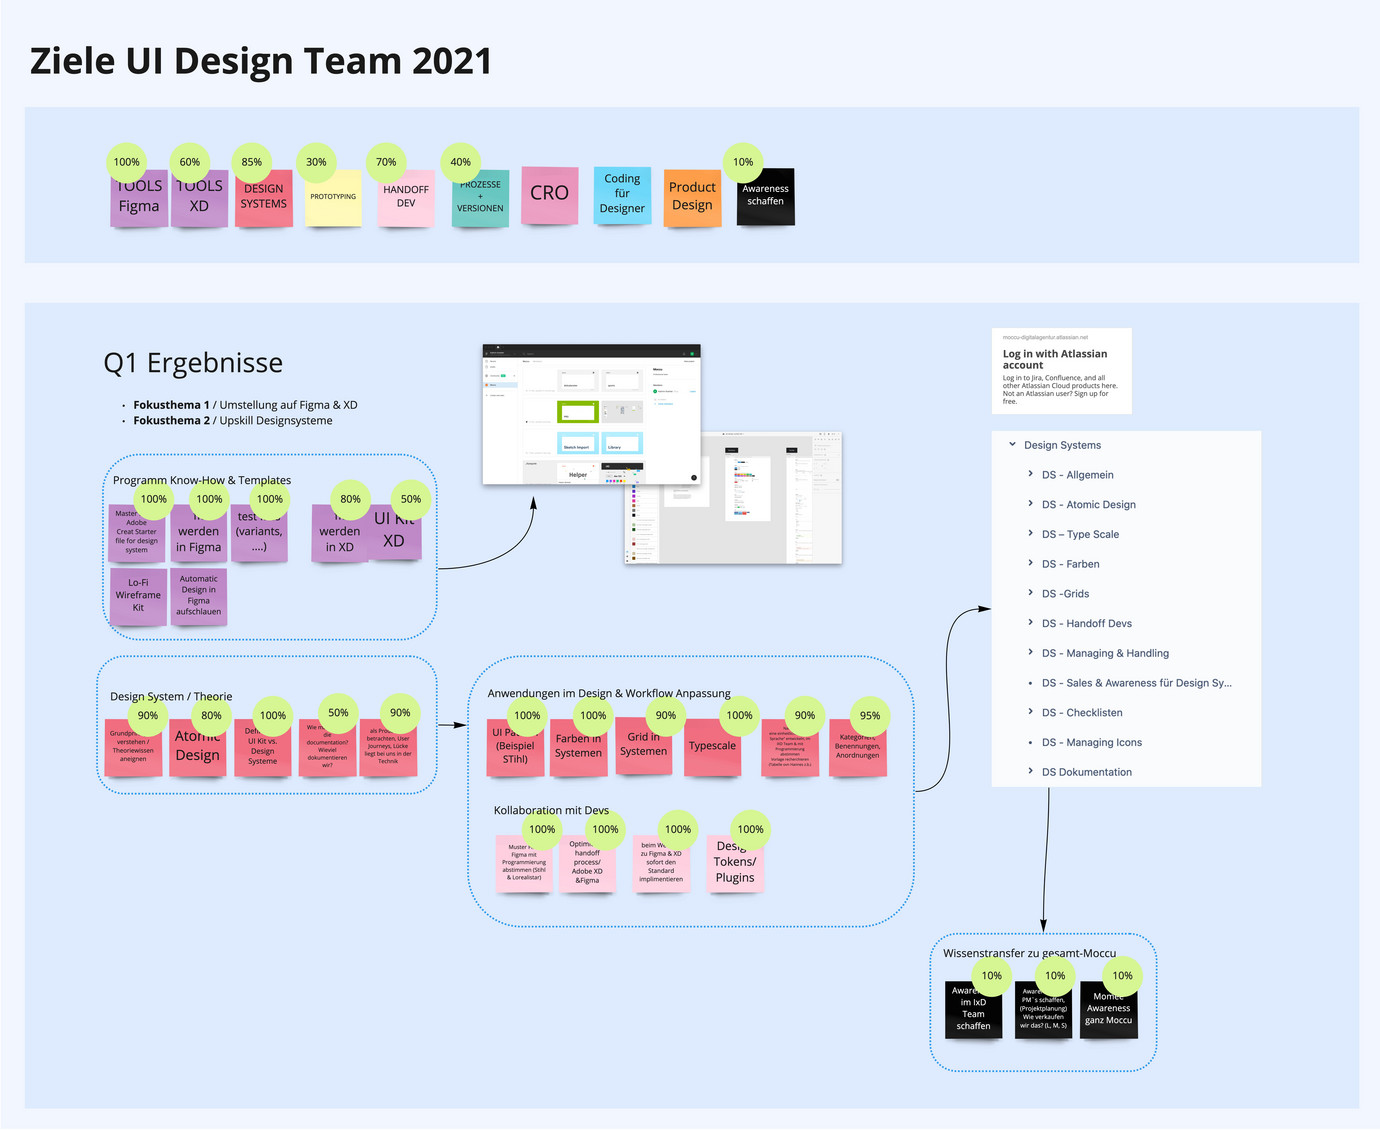 Ziele UI Design Team 2021 - Ausschnitt aus dem Miro-Board